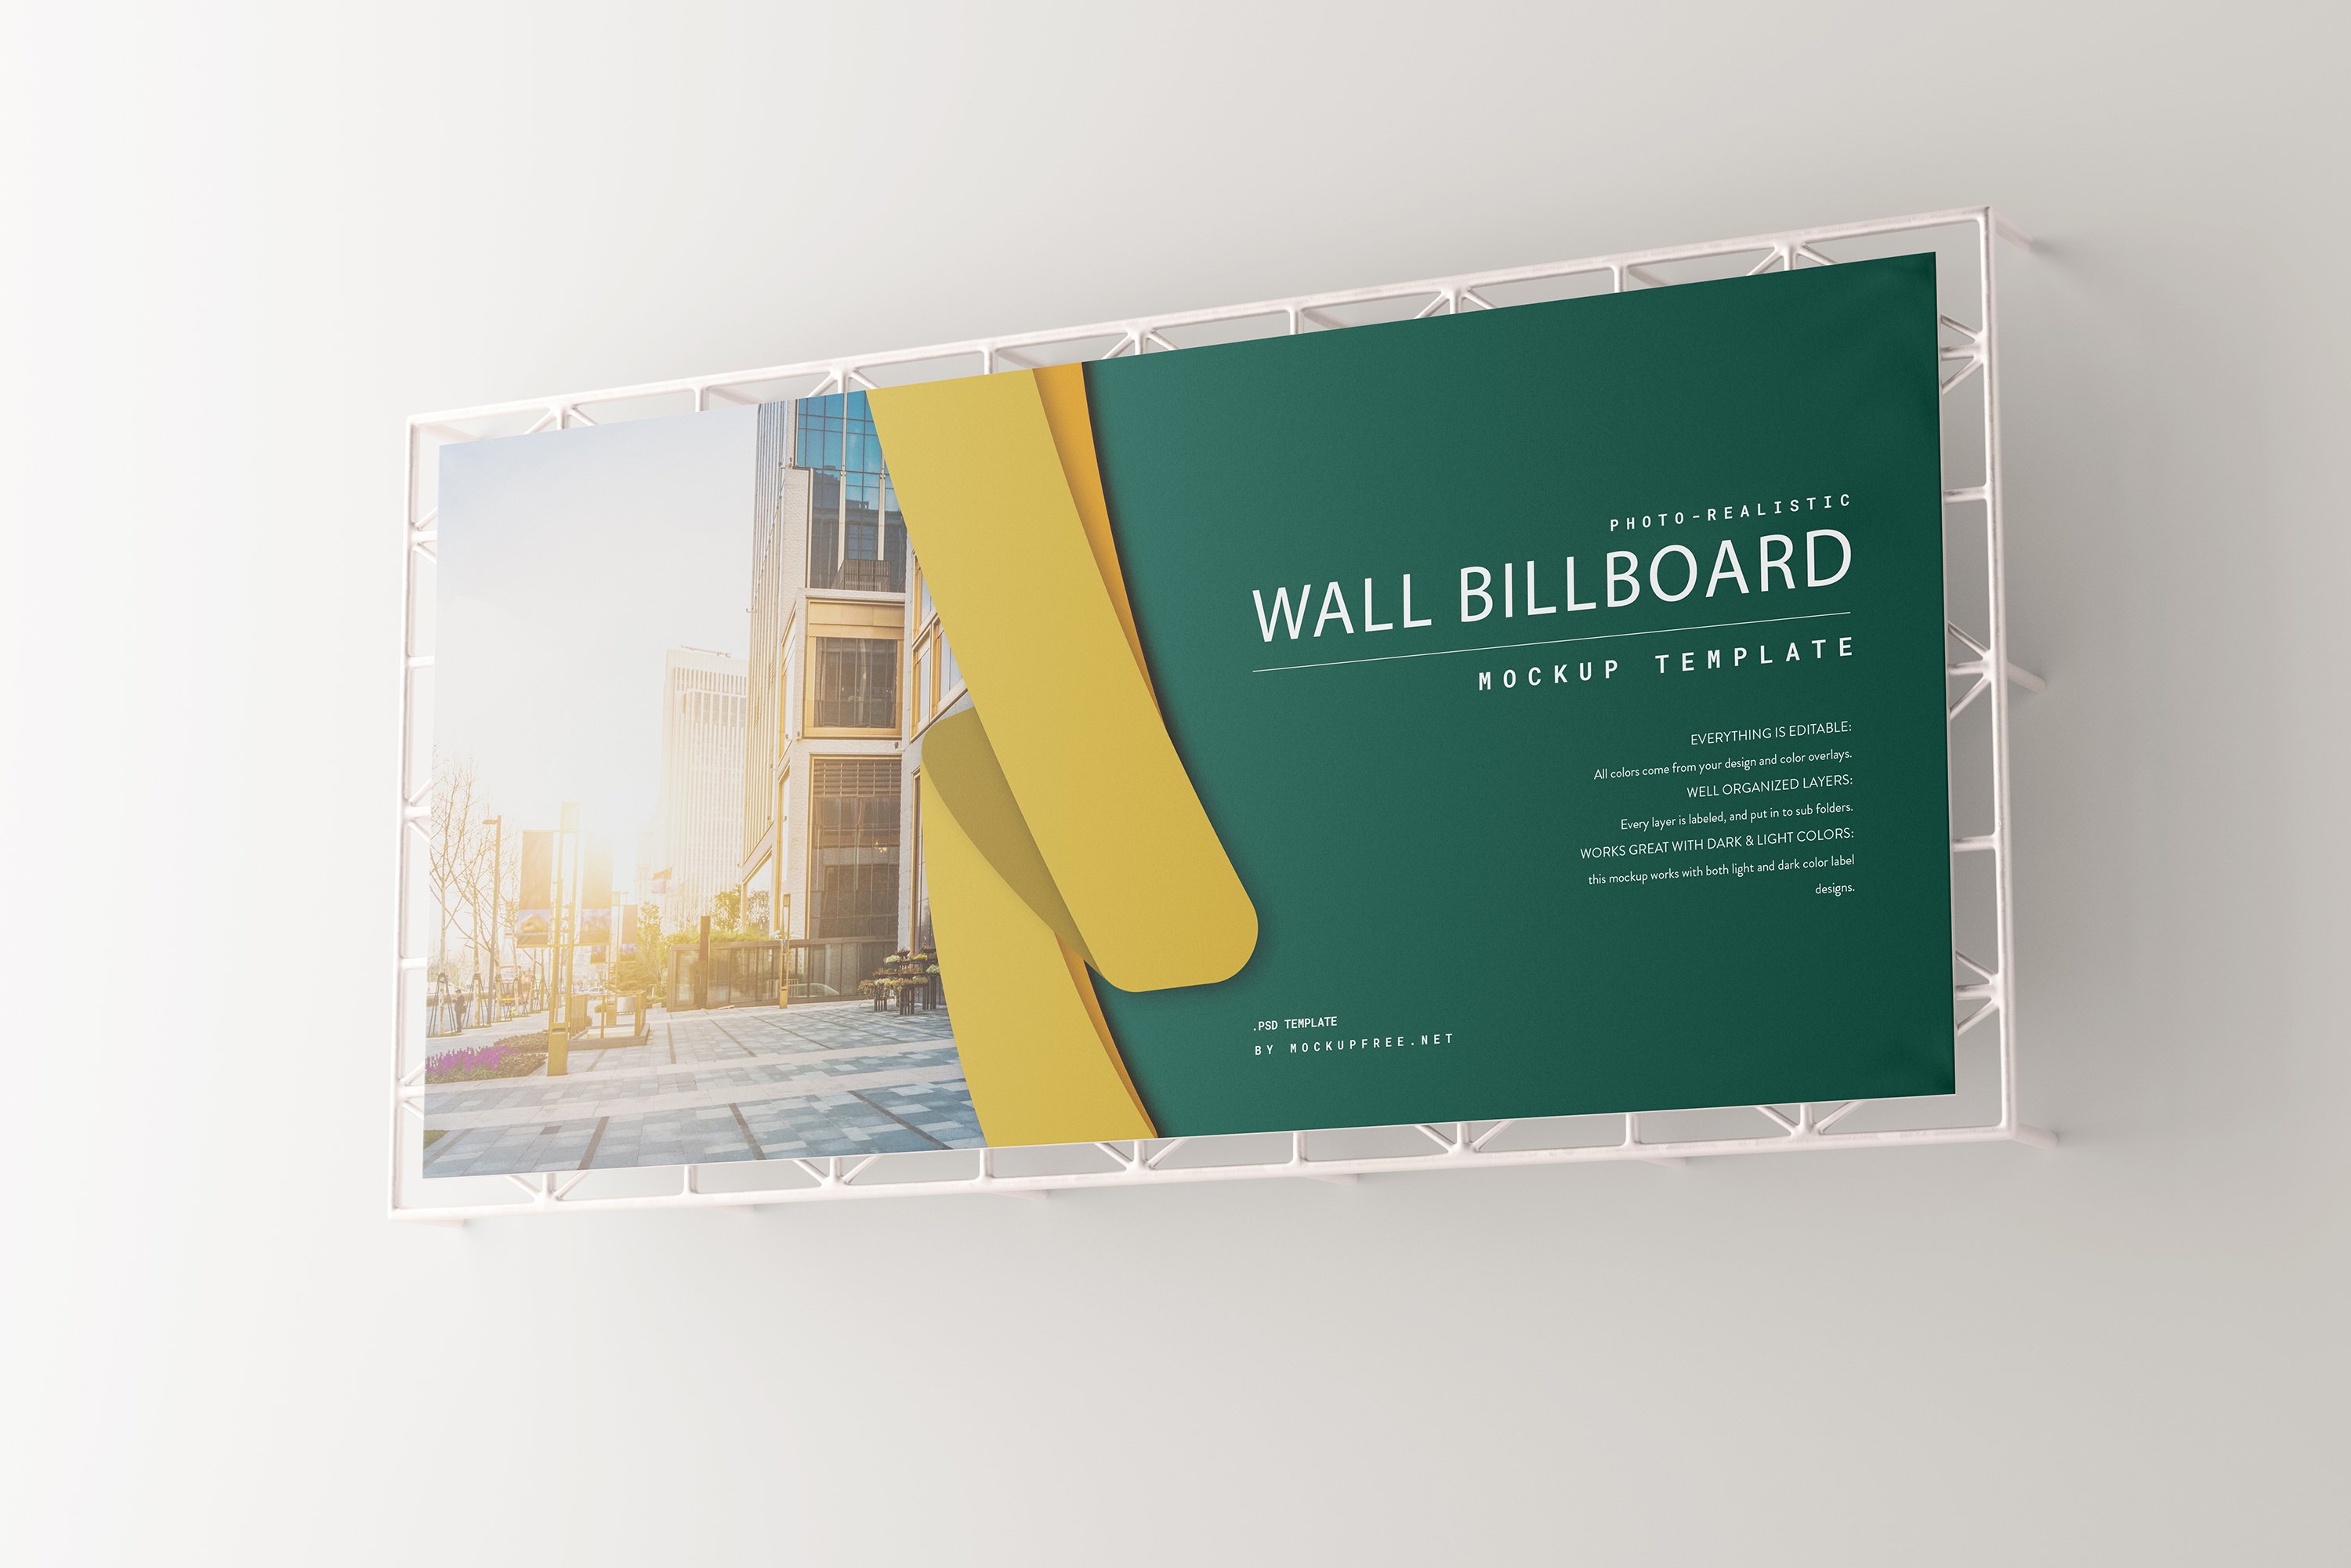 Wall Billboard Mockup preview image.